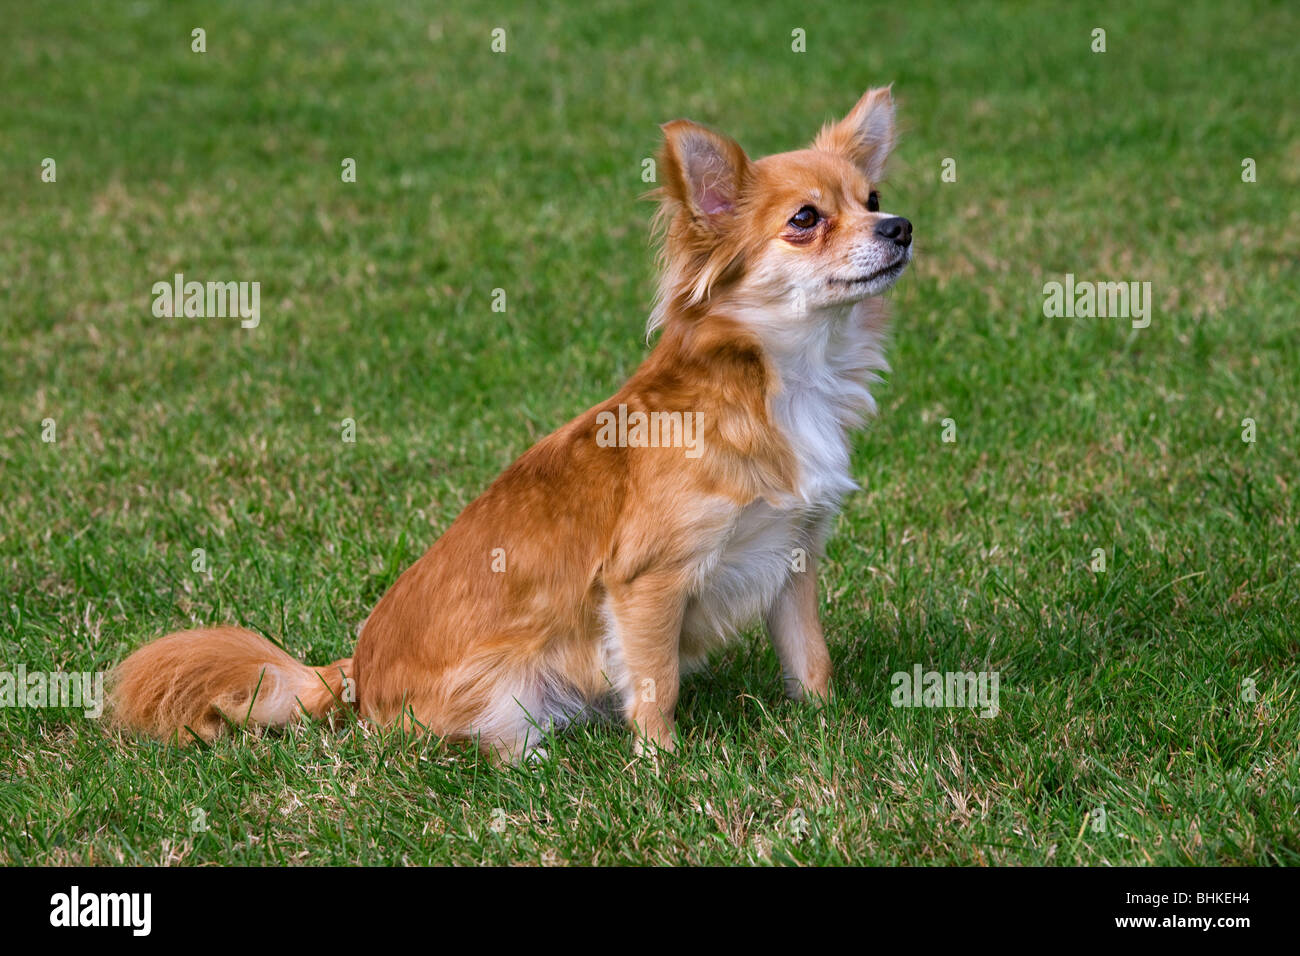 Papillon cane (Canis lupus familiaris) seduto sul prato in giardino Foto Stock